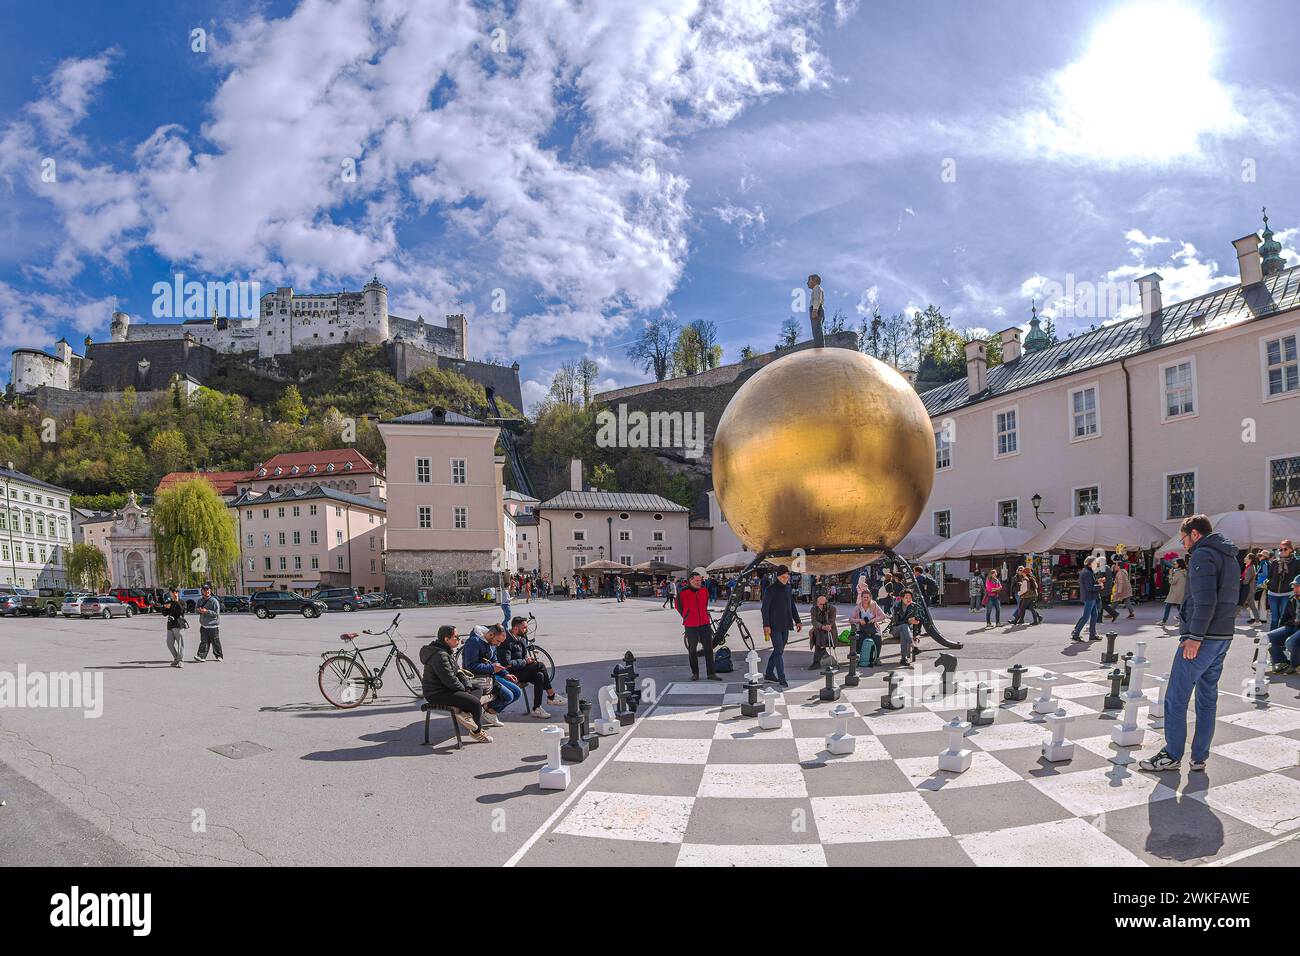 SALZBURG, AUSTRIA - APRIL 27, 2023: Chess game drawn on asphalt in Kapitelplatz, near monument to Paul Fuerst 'Sphere', a golden ball. Stock Photo